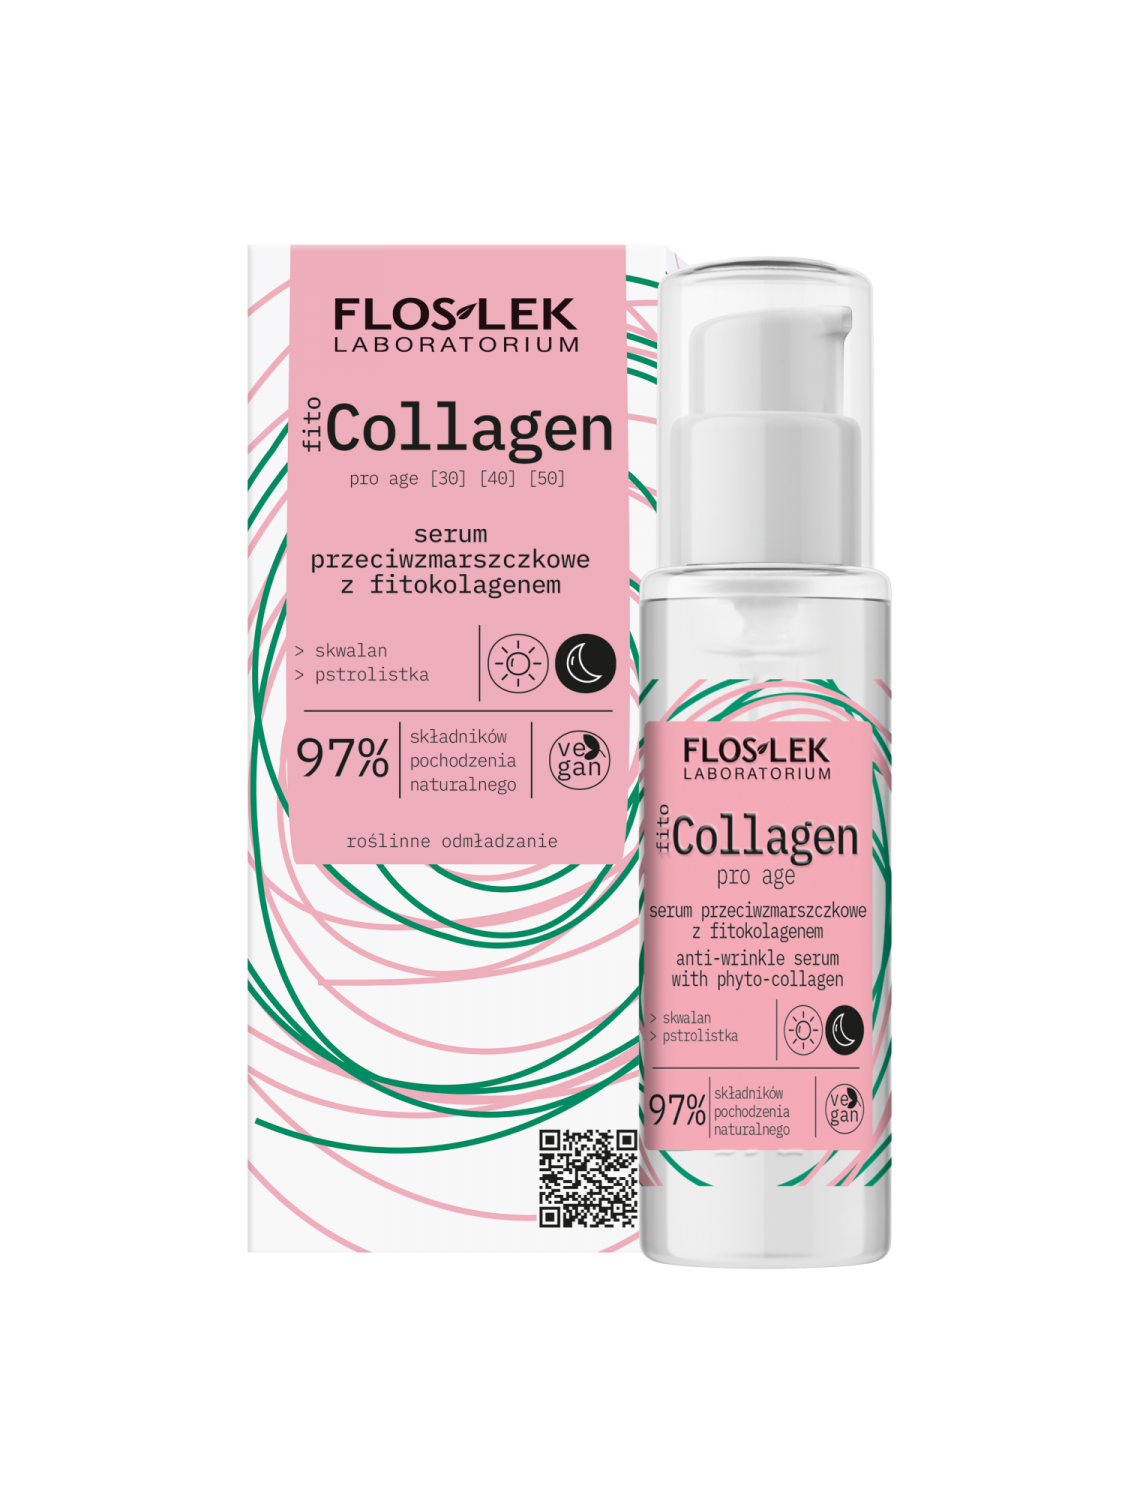 PhytoCOLLAGEN pro age Anti-wrinkle serum with phytocollagen 30 ml Floslek